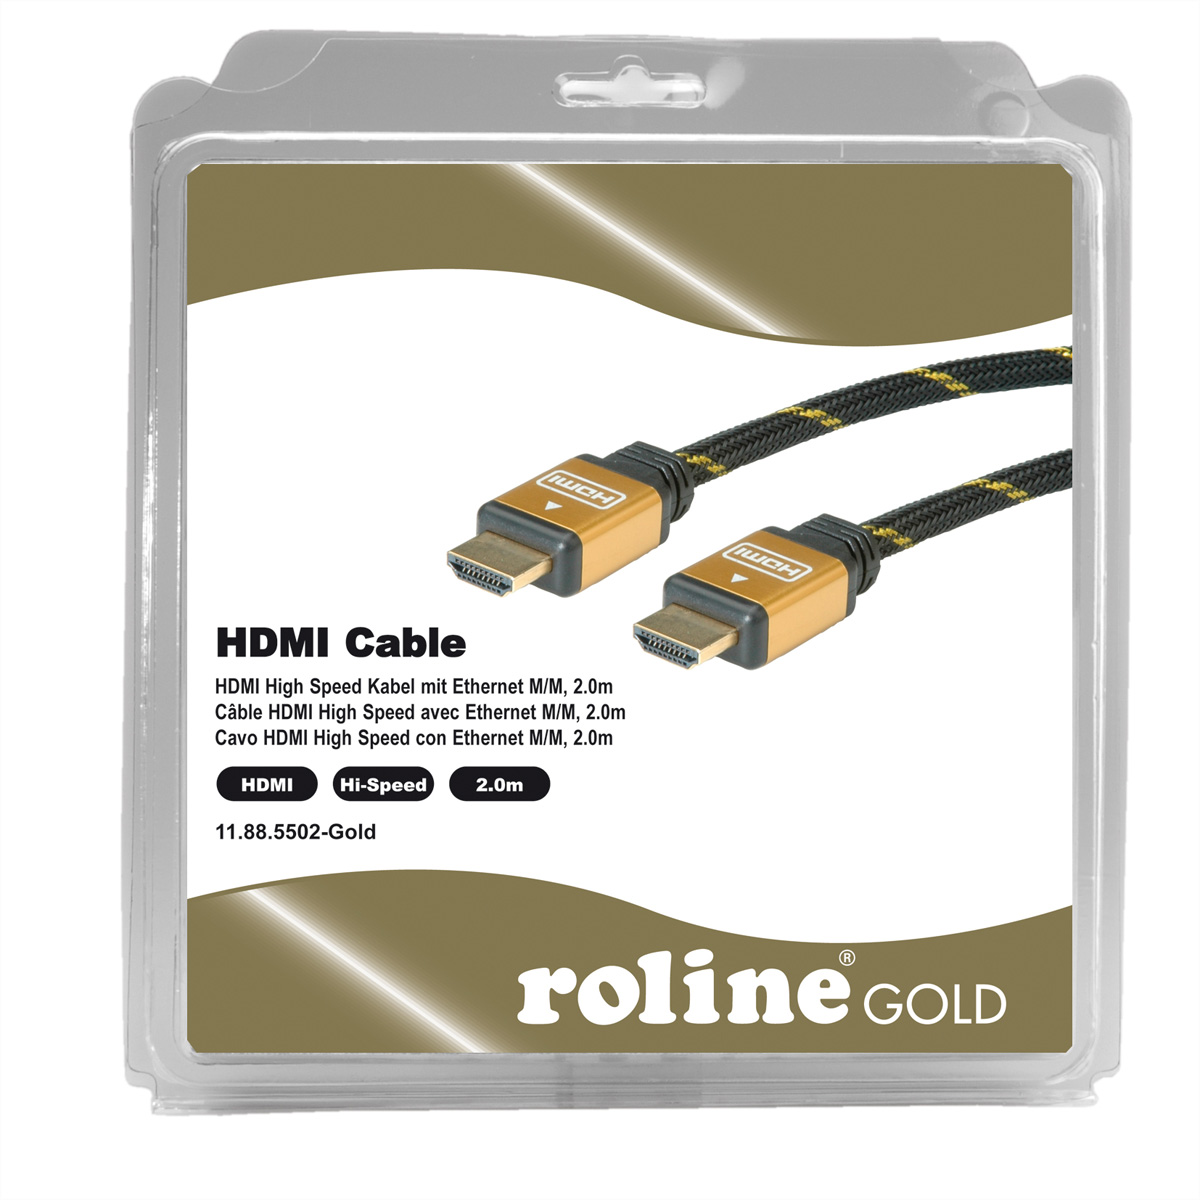 ROLINE GOLD mit High Speed Speed Kabel HDMI Kabel Ethernet HDMI High mit Ethernet